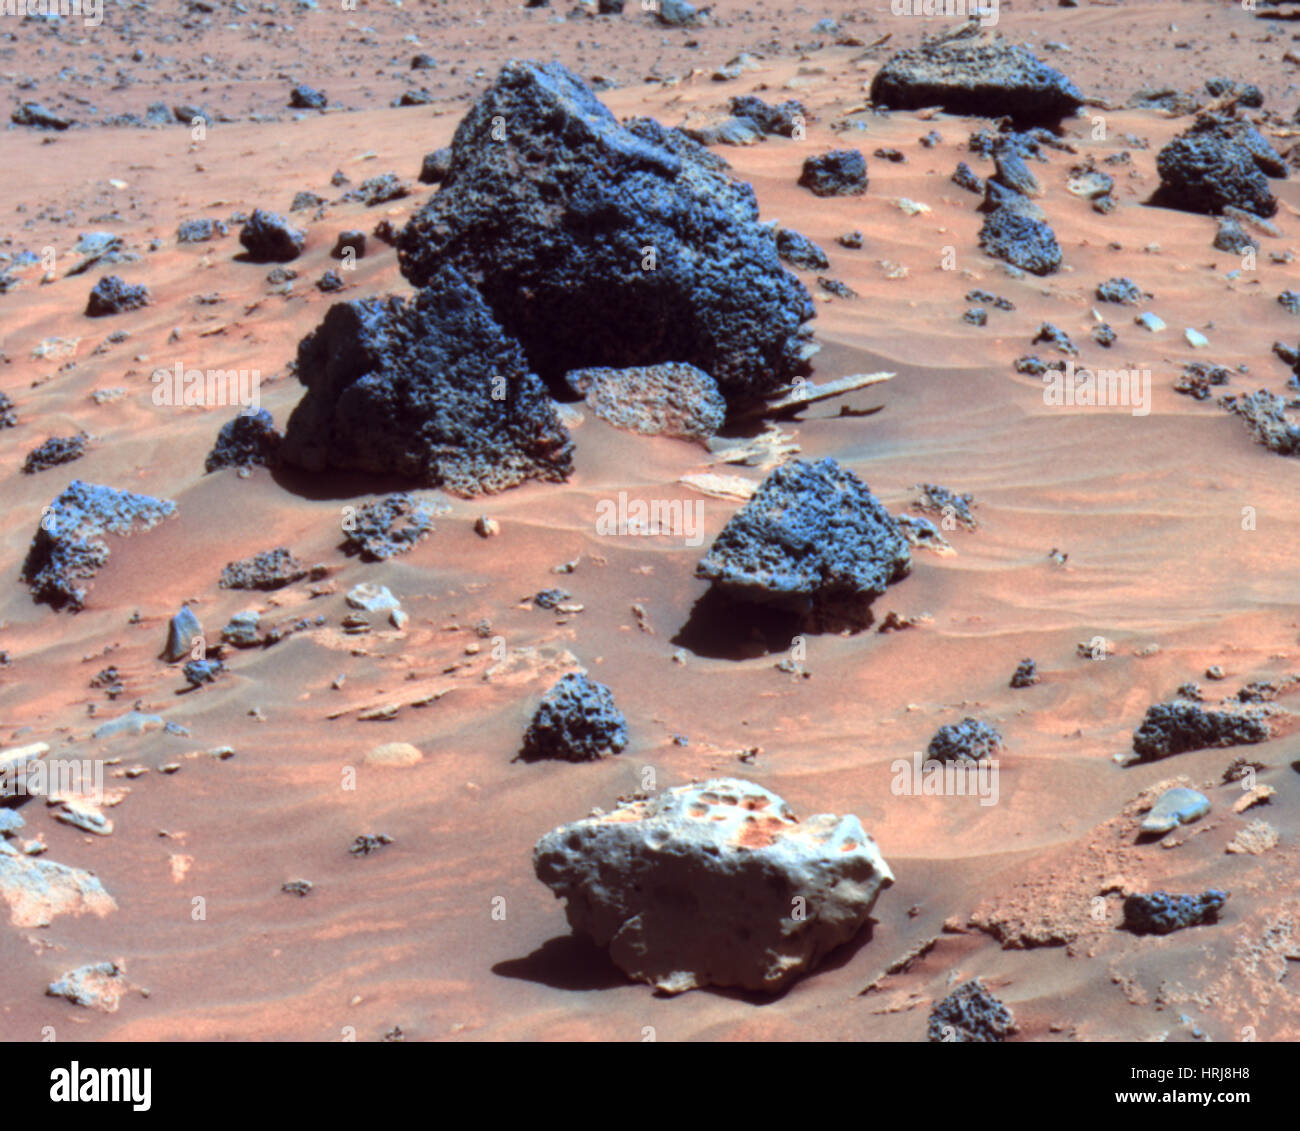 Mars Exploration Rover Spirit Mission, Possible Meteorite Stock Photo